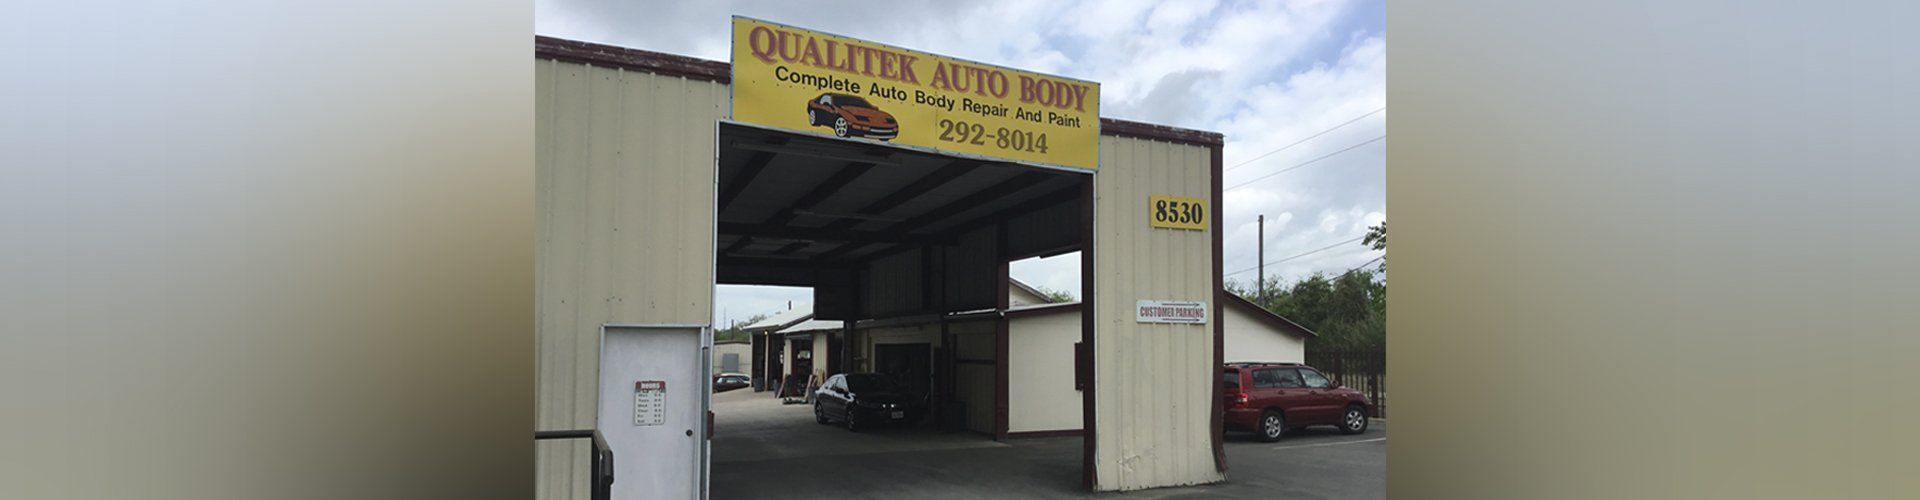 Qualitek Auto Body - Storefront